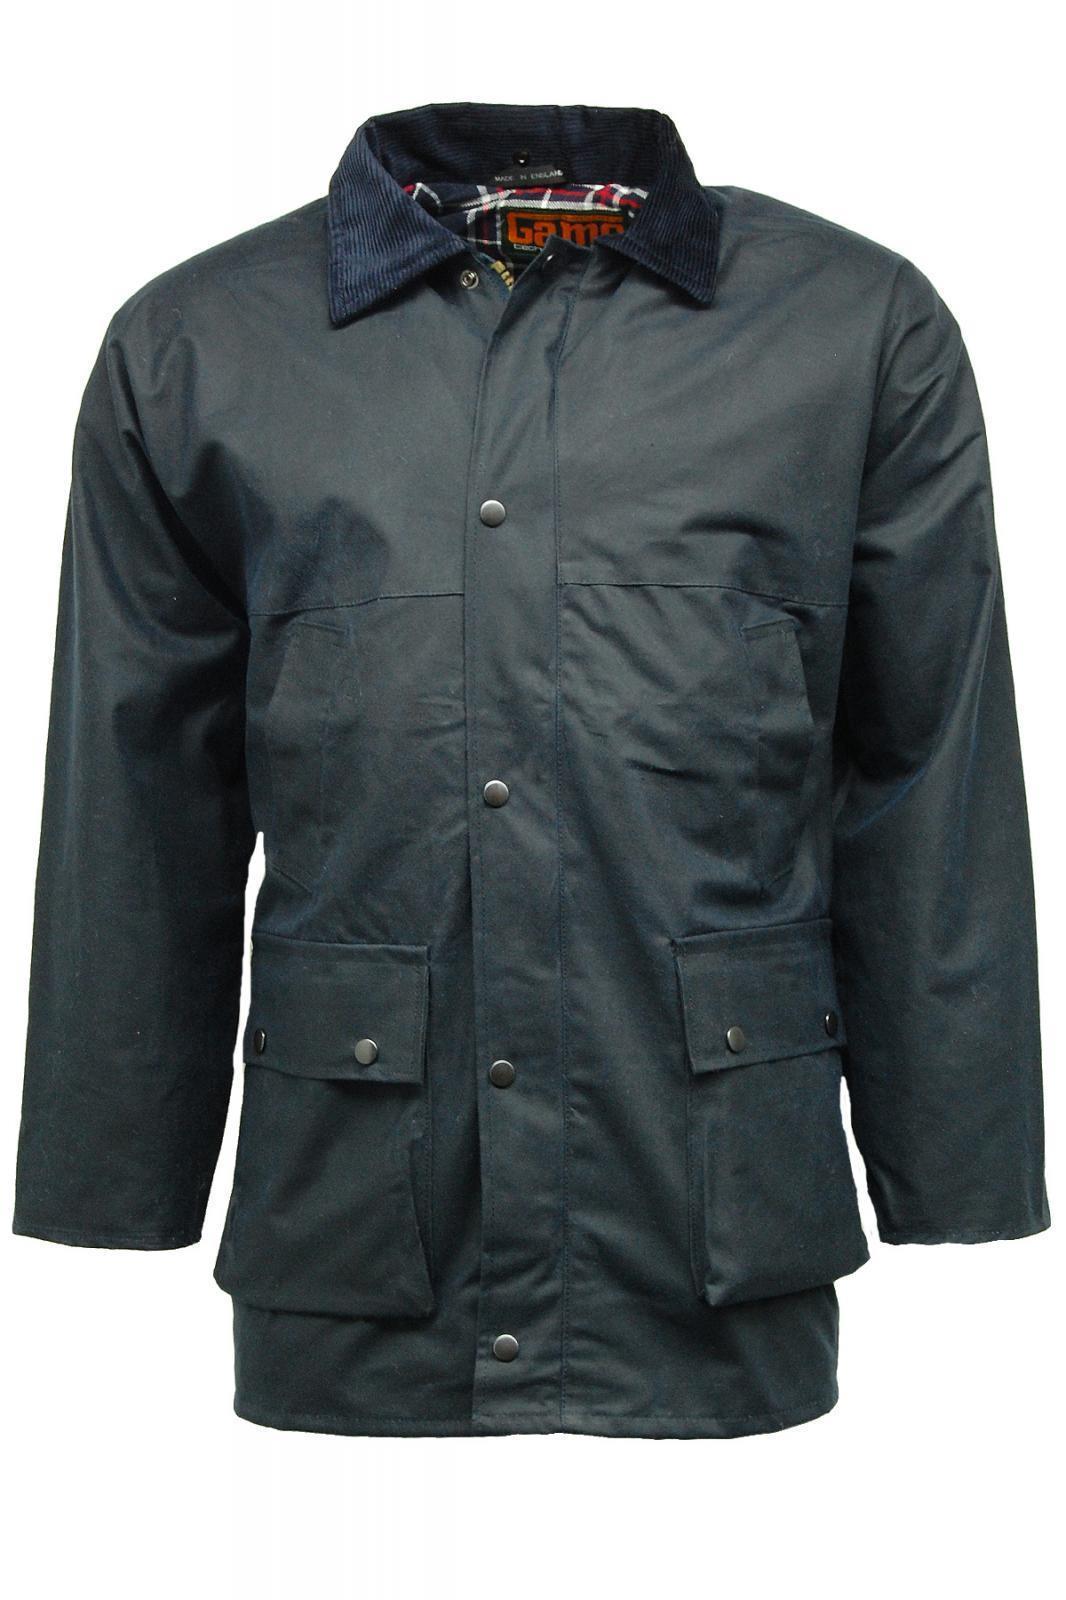 Mens Premium British Unpadded Wax Jacket | eBay